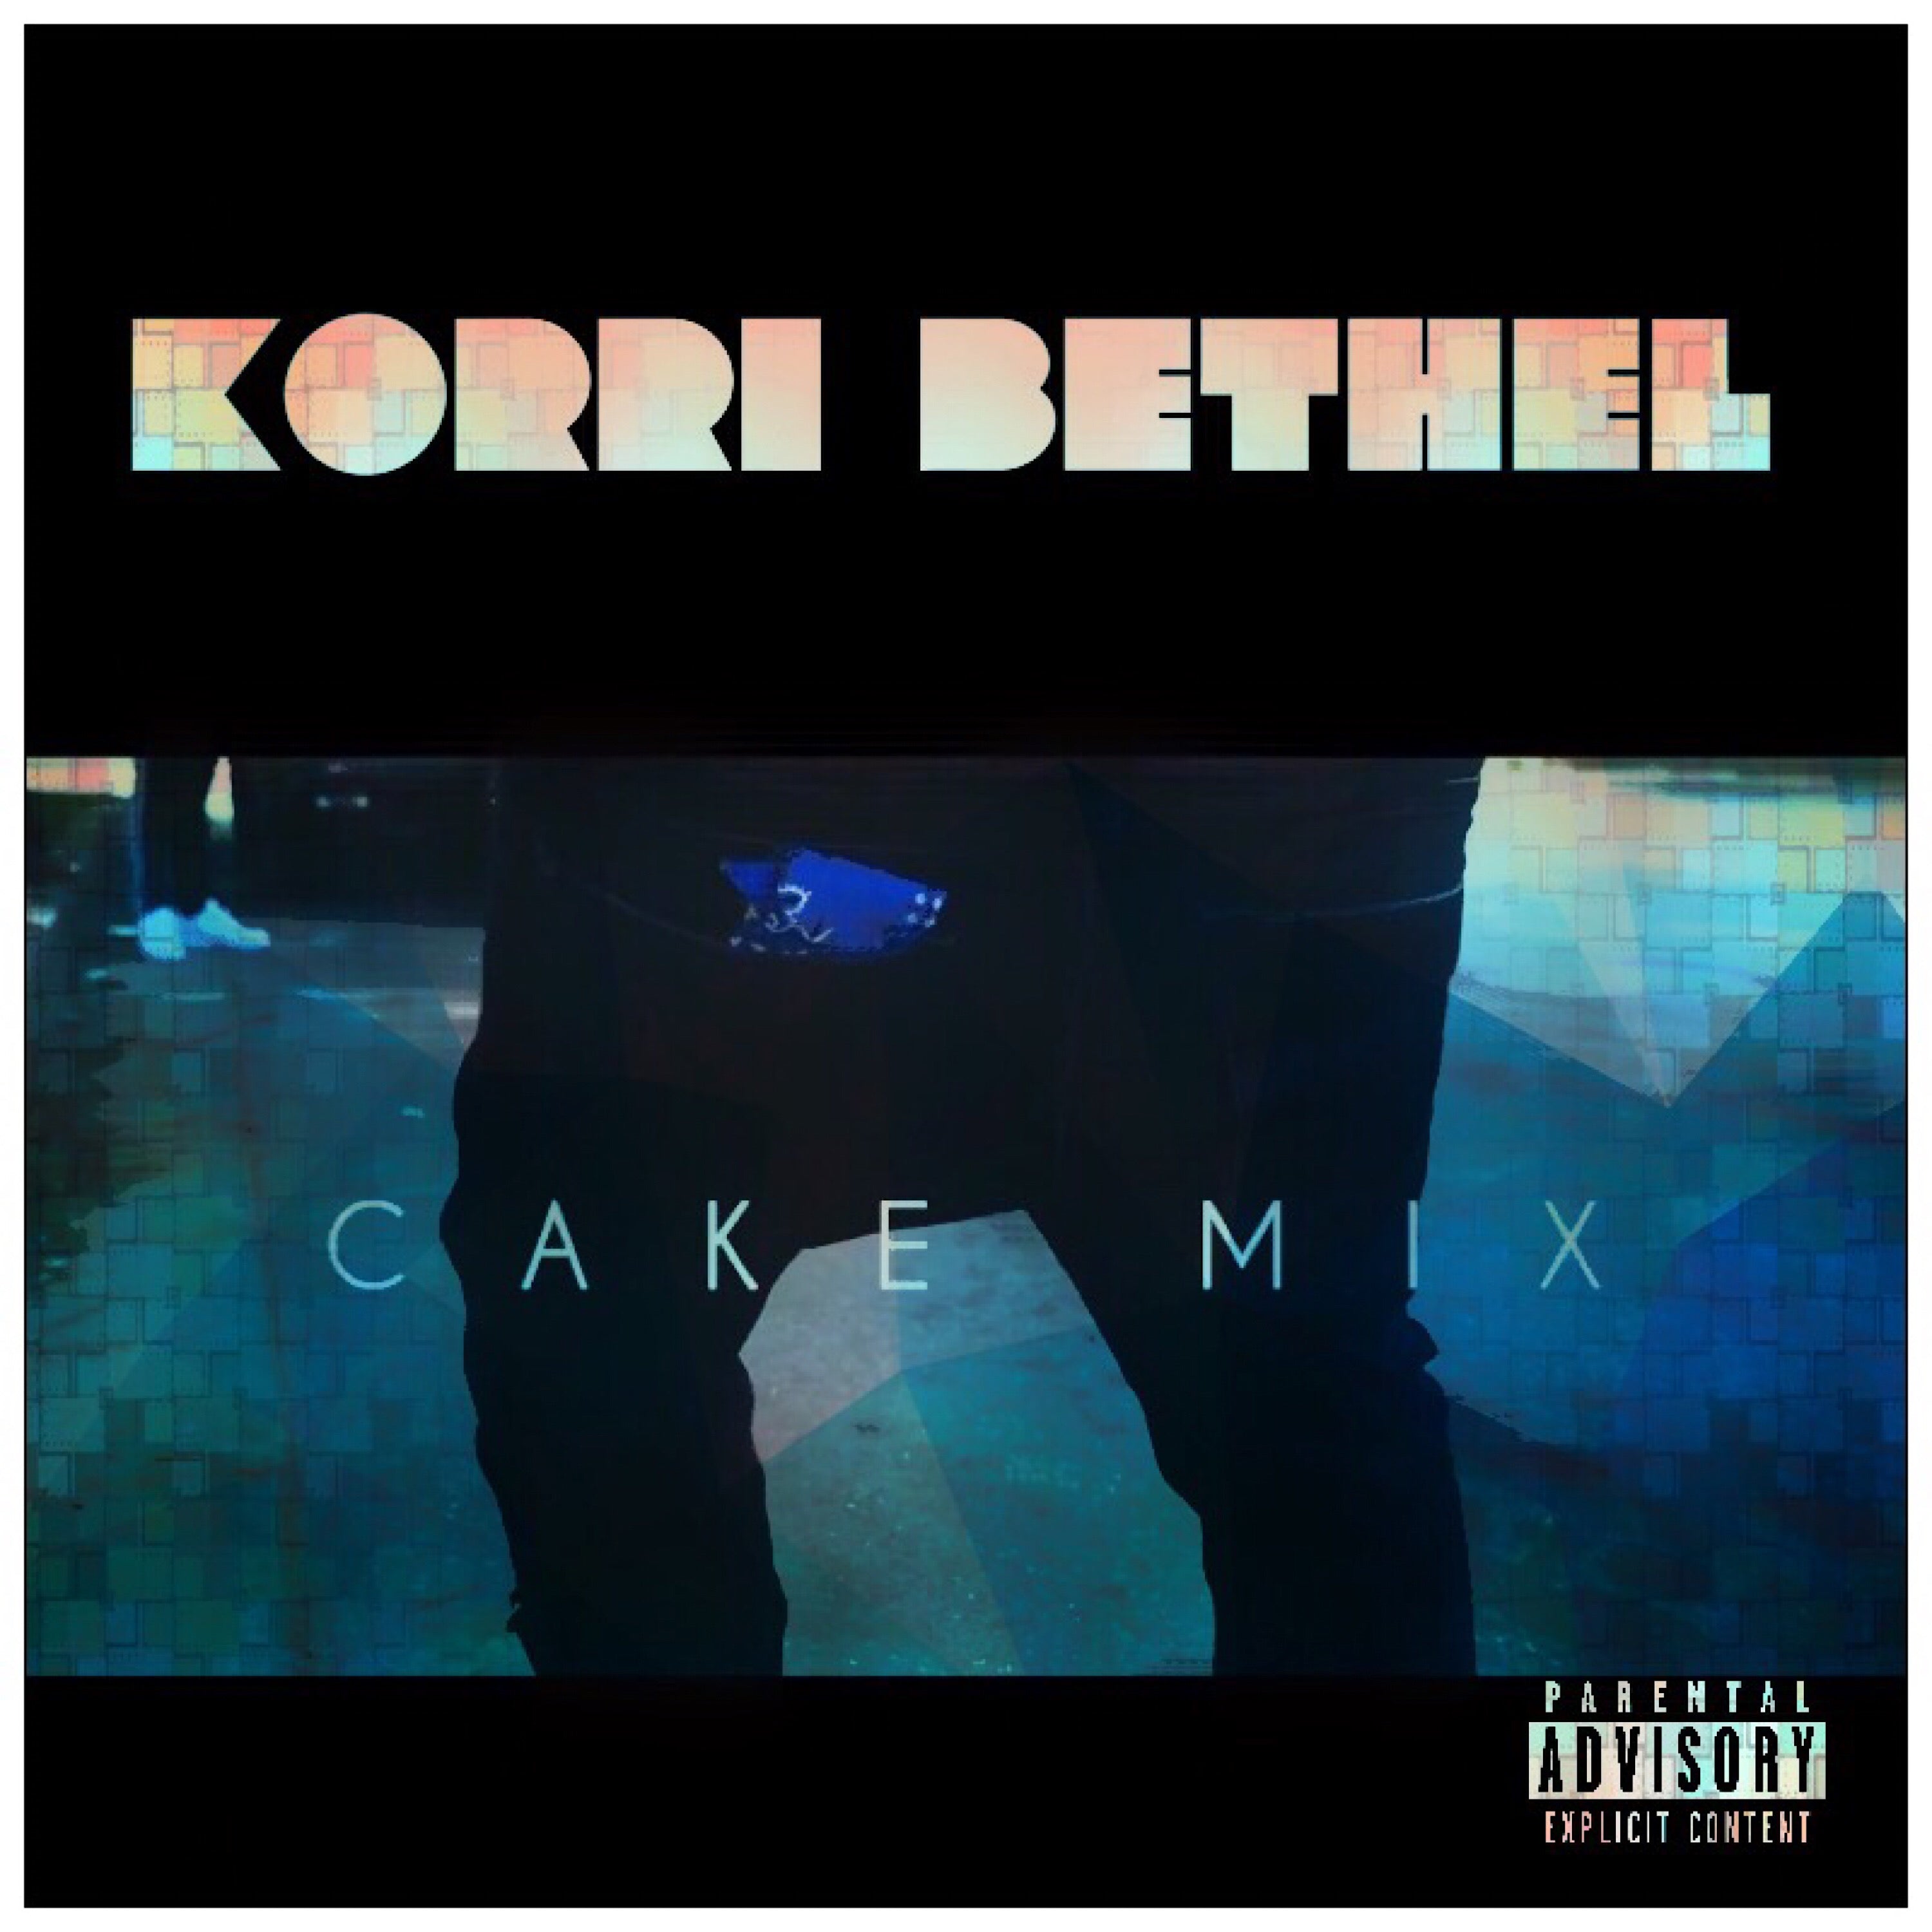 Korri Bethel CakeMix